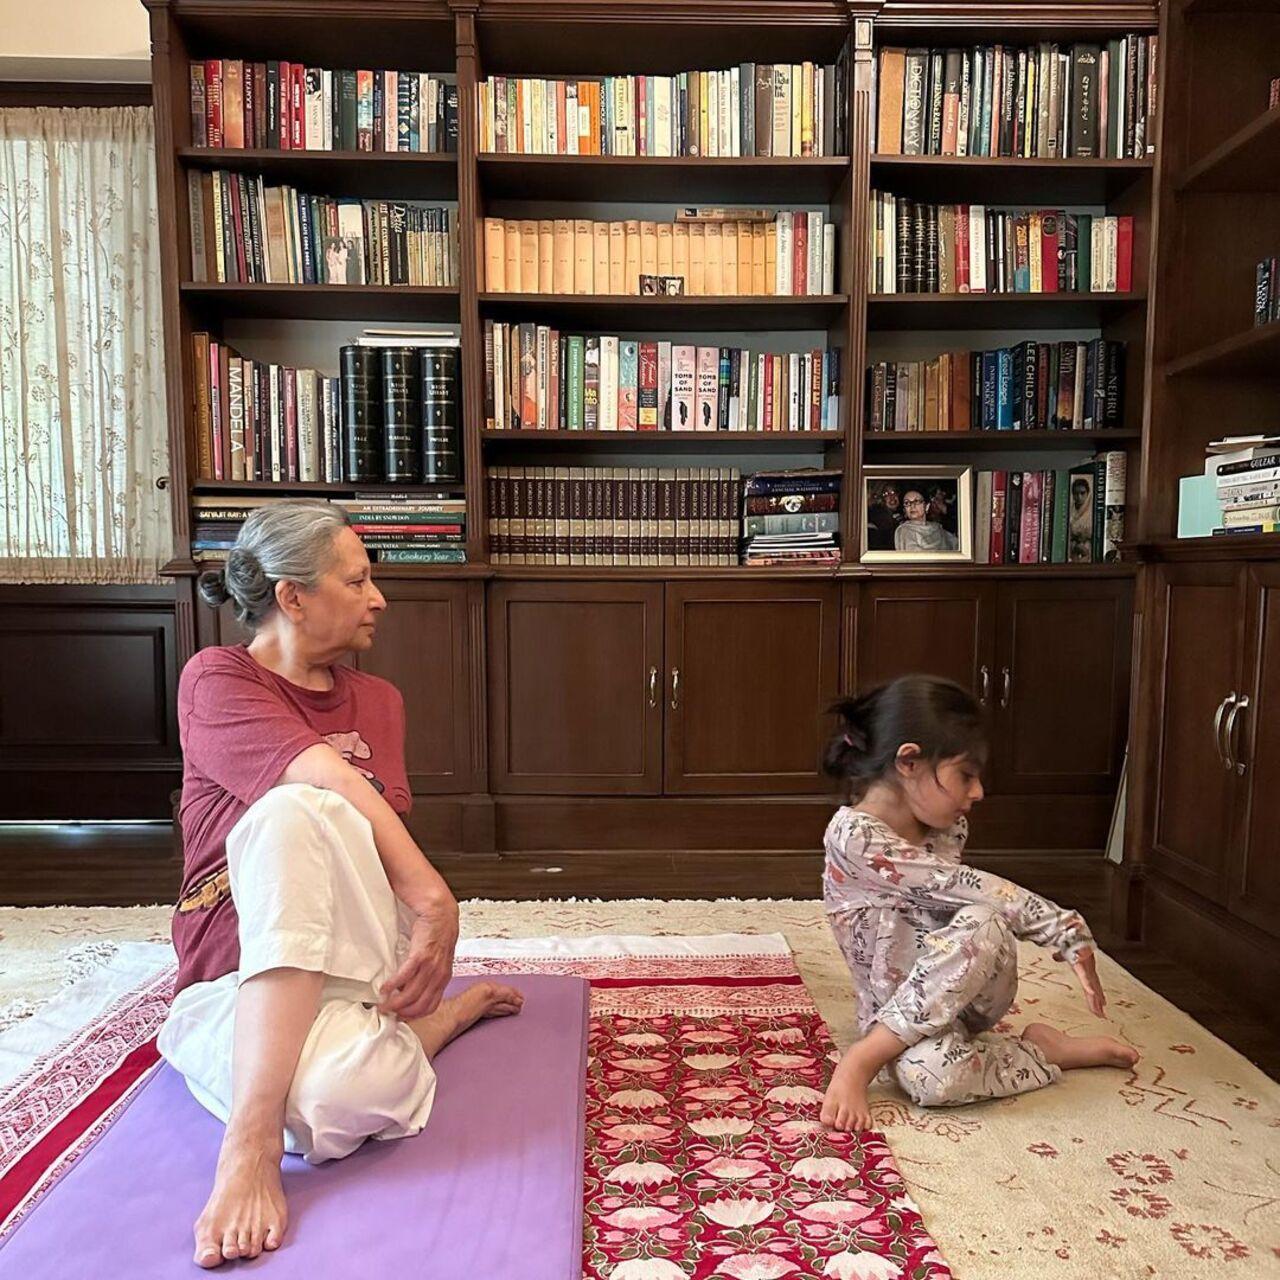 Inaaya Naumi Kemmu learnt yoga from her grandmother Sharmila Tagore